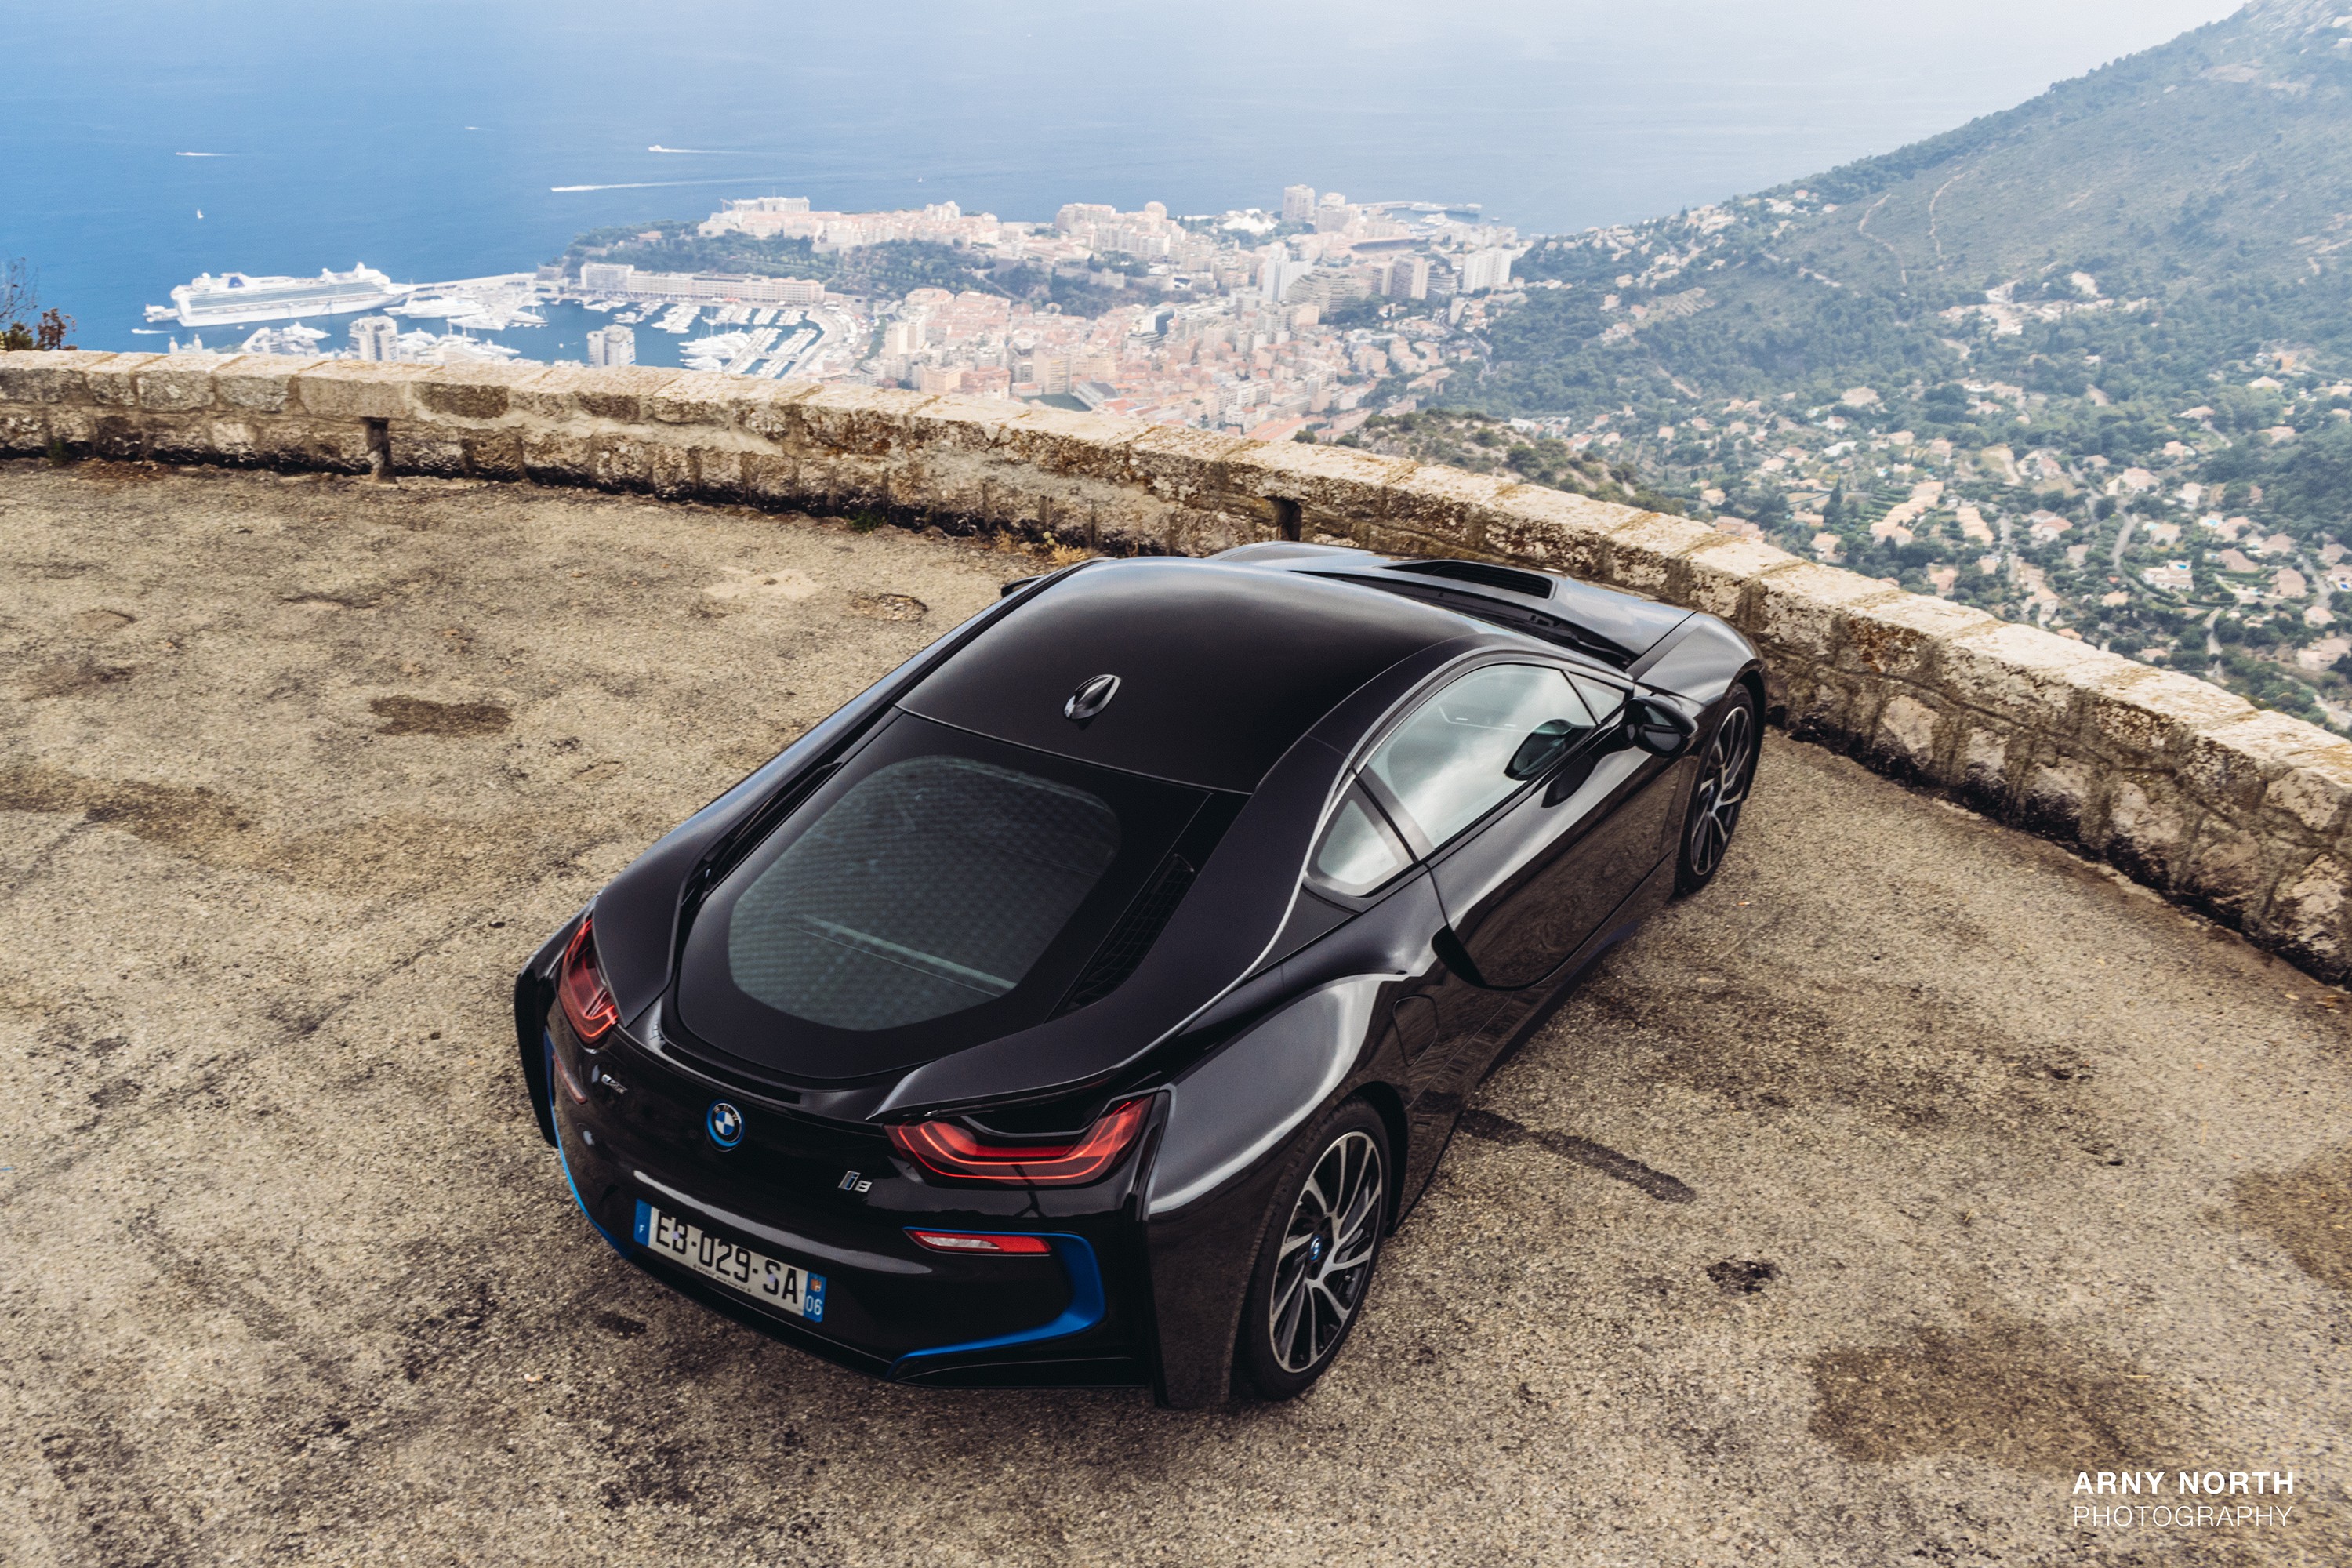 BMW i8, Black cars, Sports car, Monaco, Arny North Wallpaper